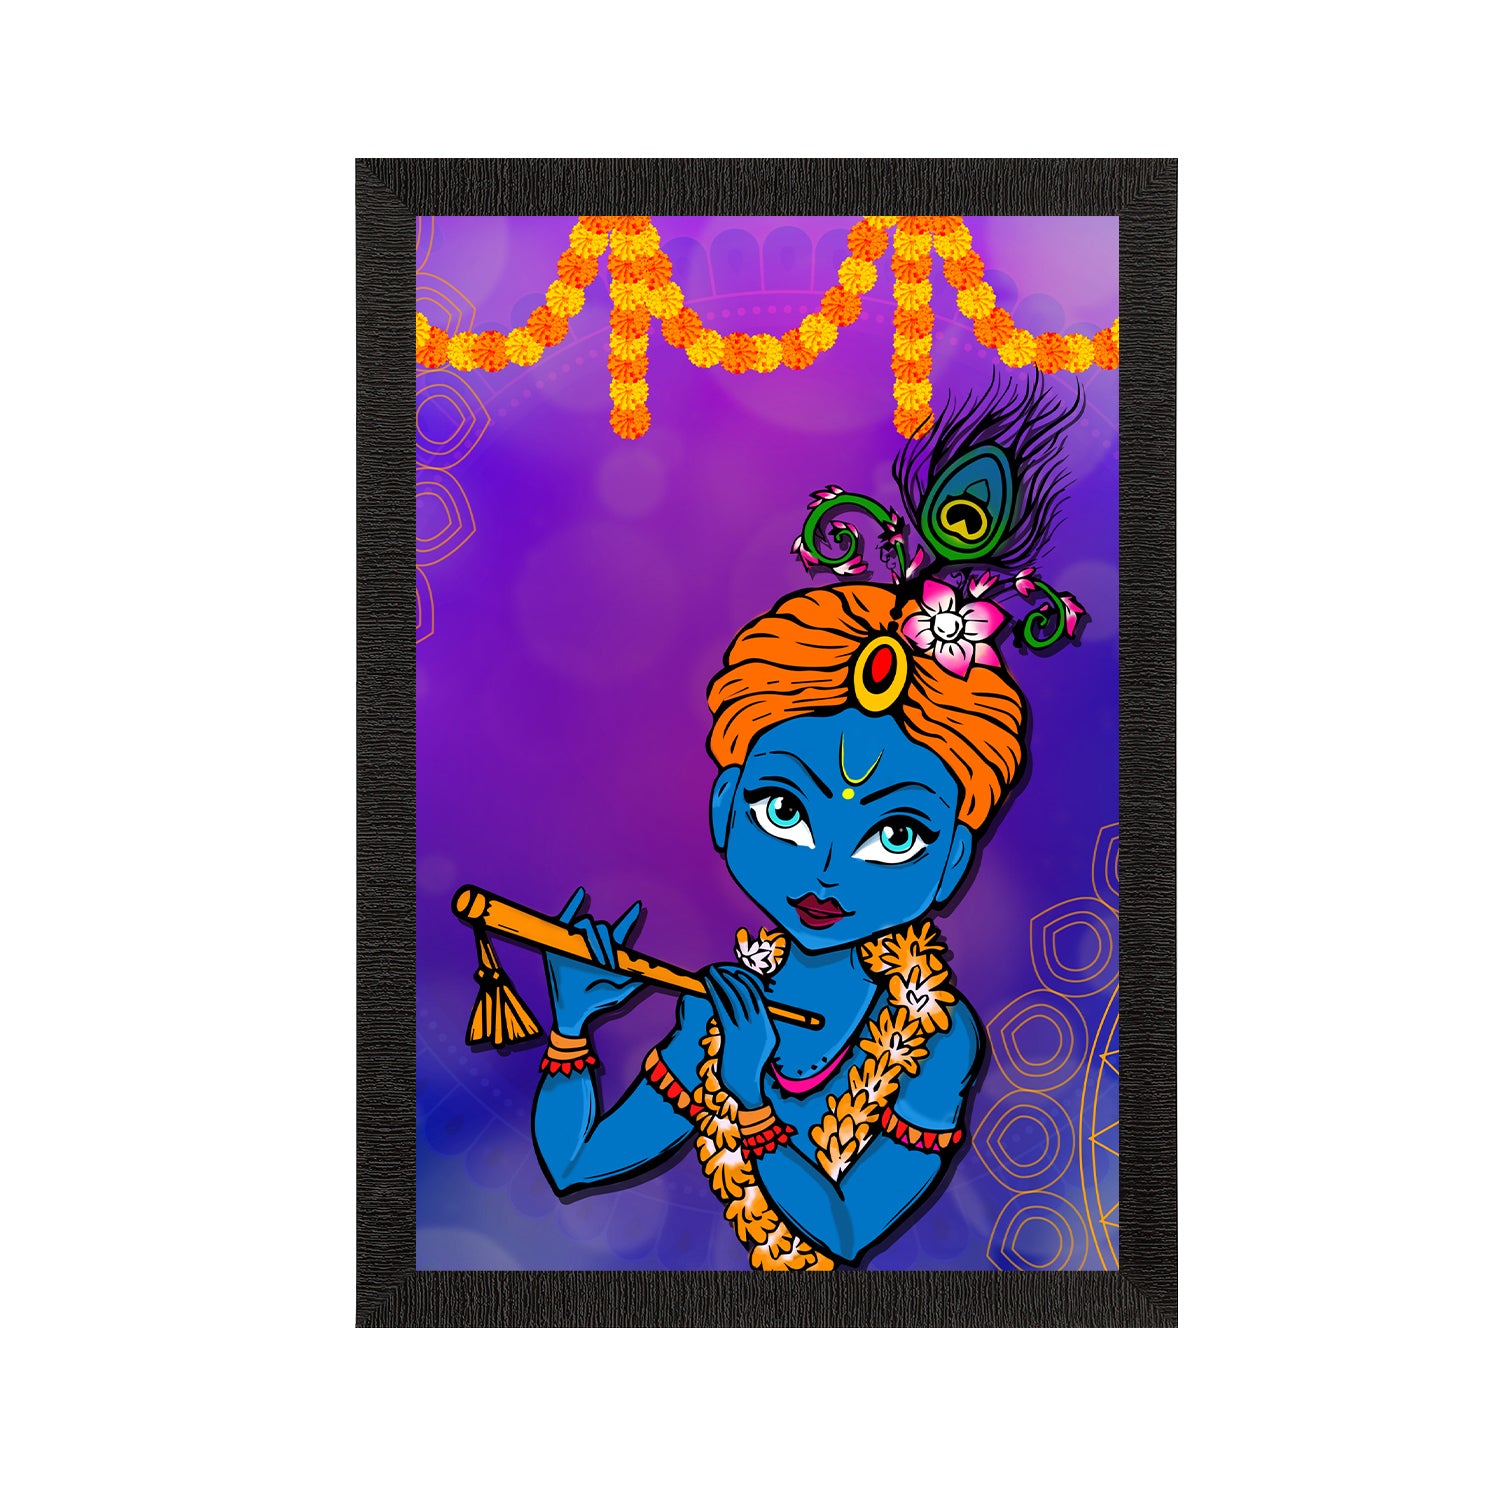 Lord Krishna Painting Digital Printed Religious Wall Art